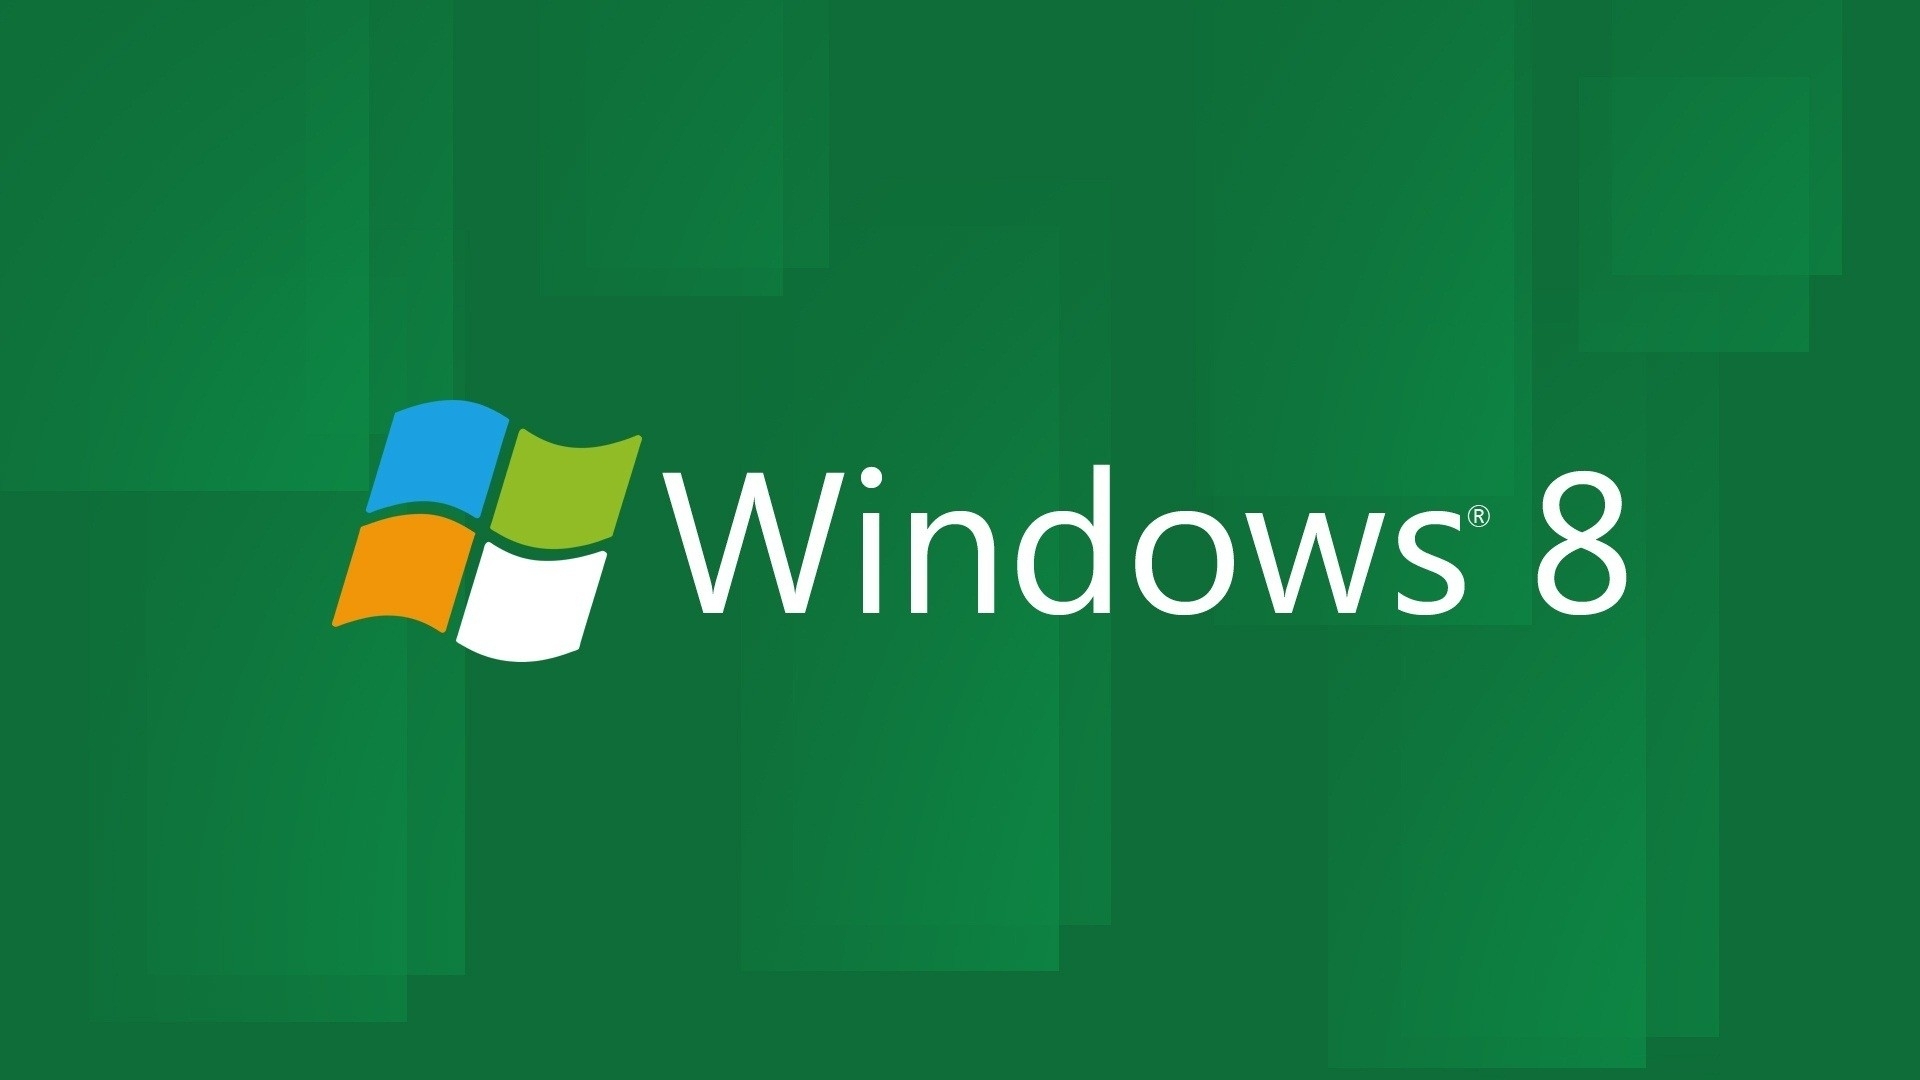 Windows Microsoft Green Background Wallpaper Jpg